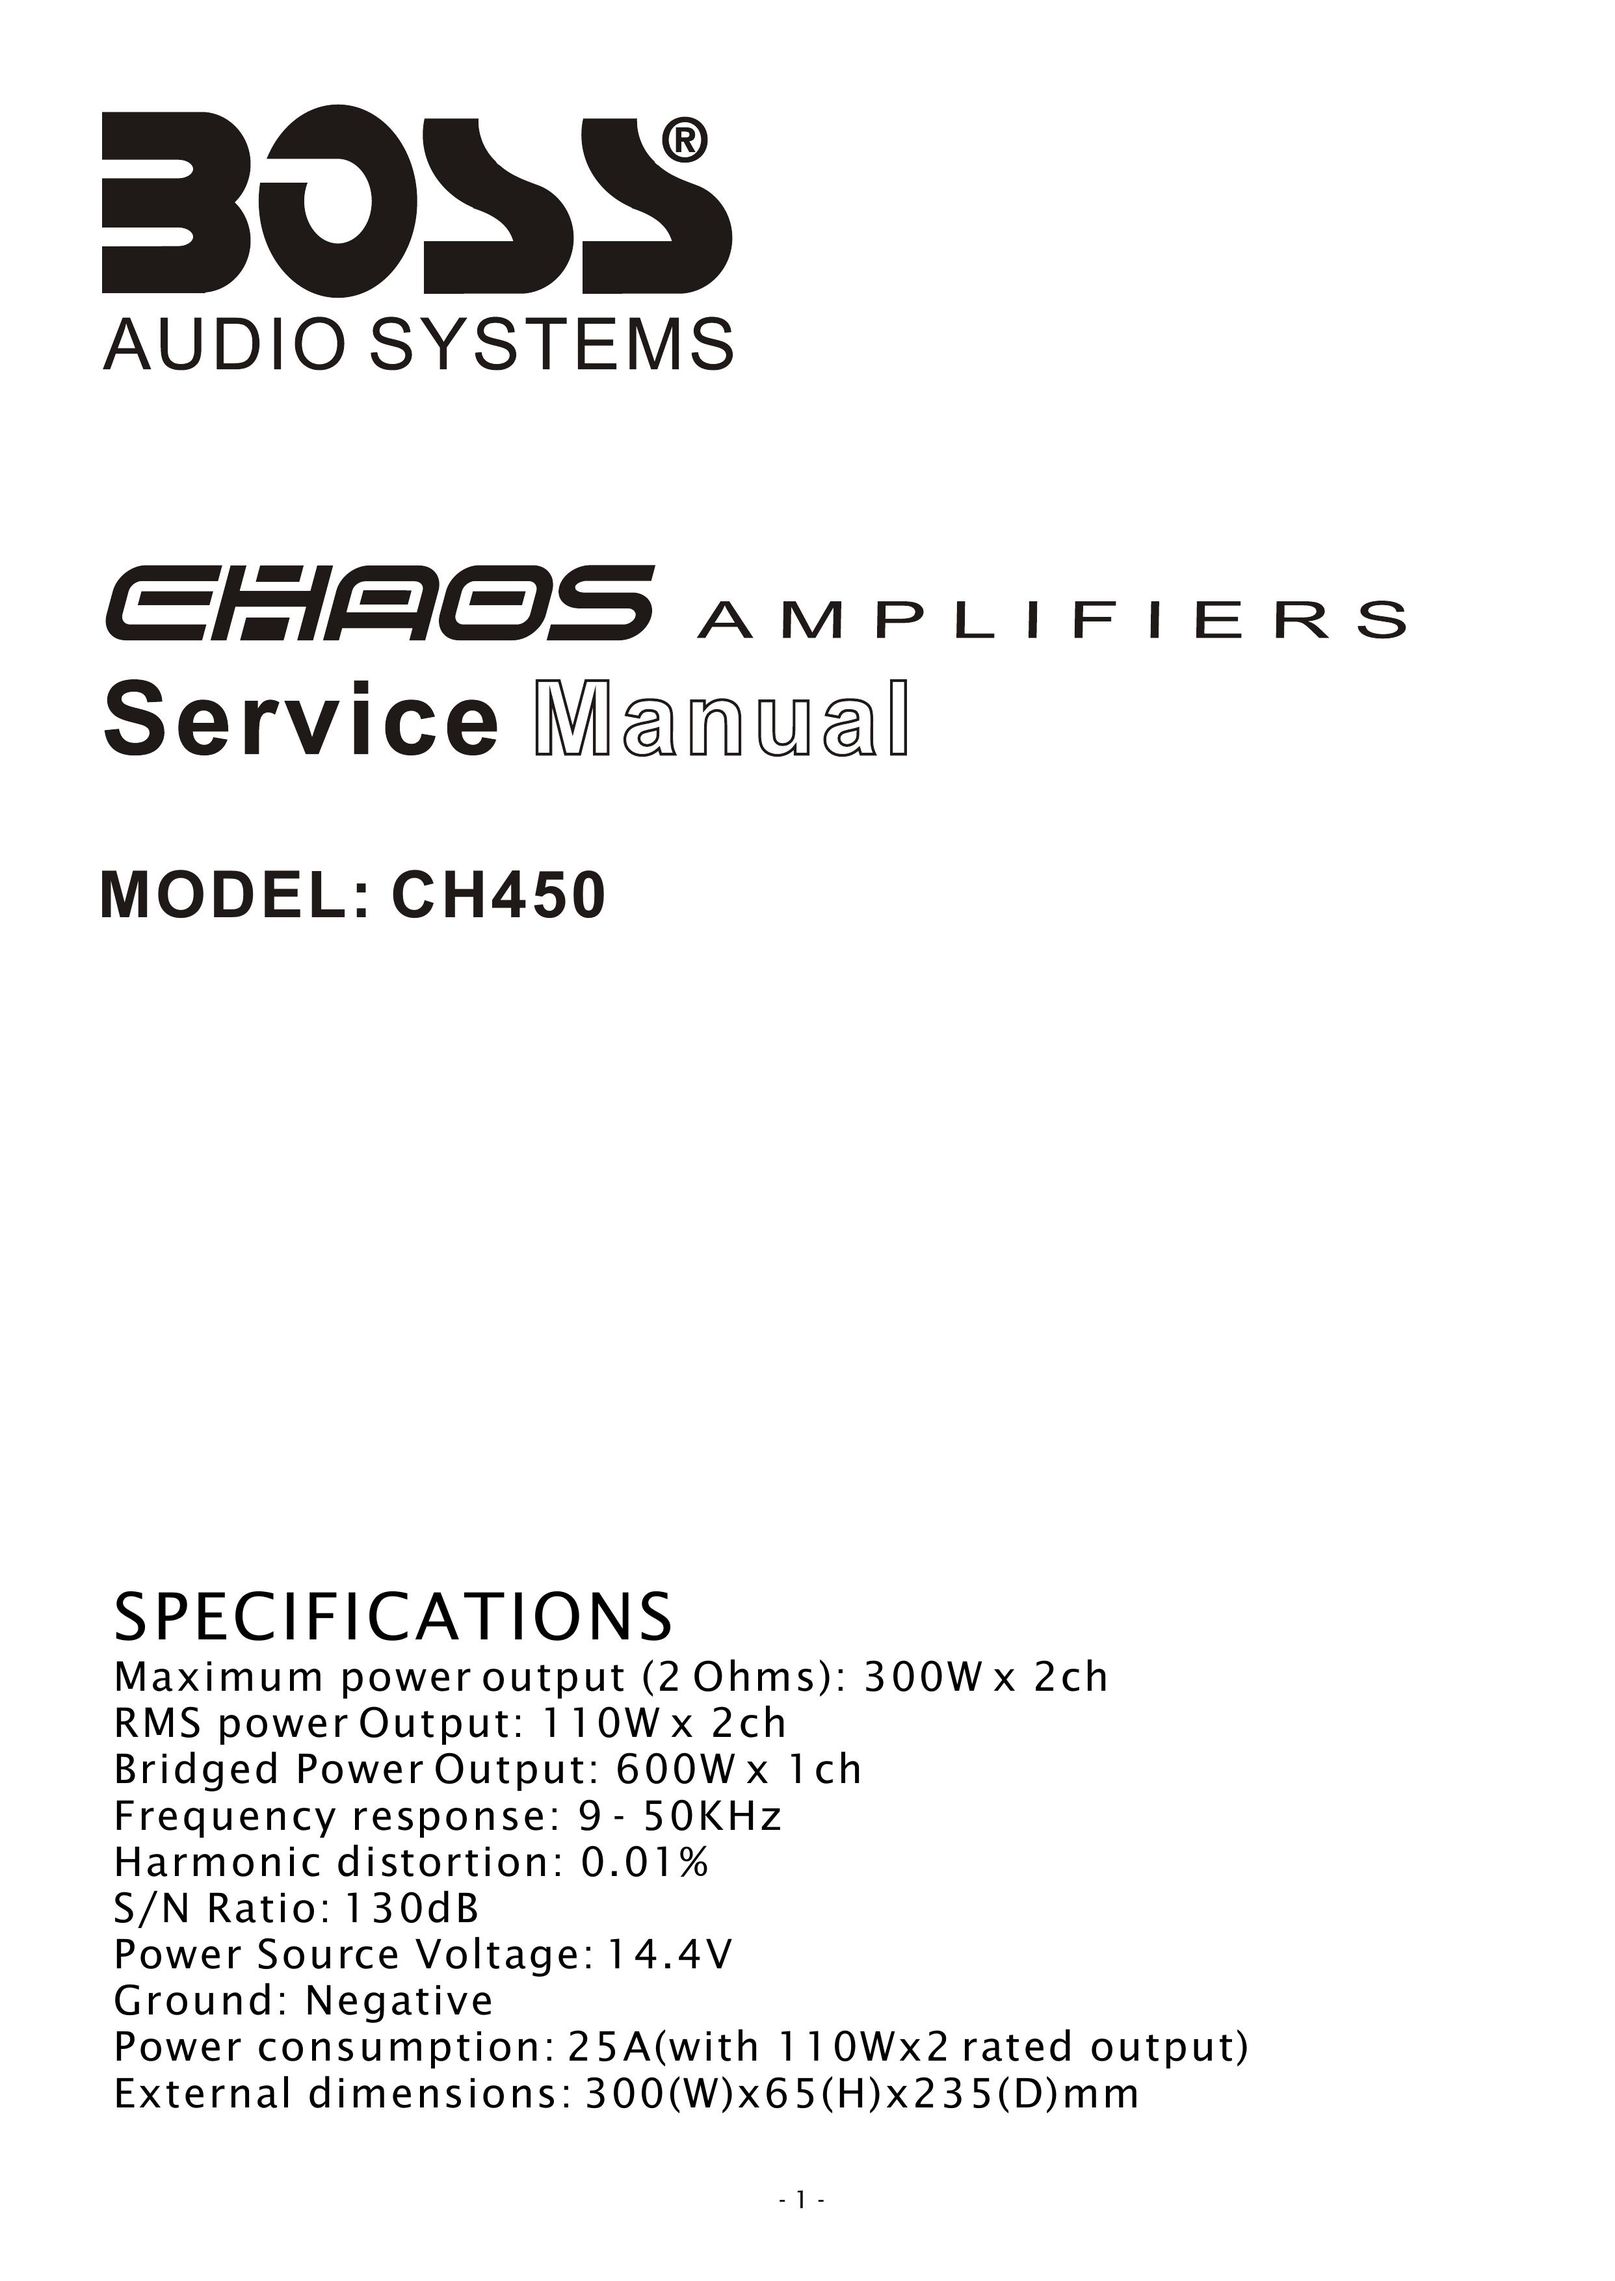 Boss Audio Systems CH450 Car Amplifier User Manual